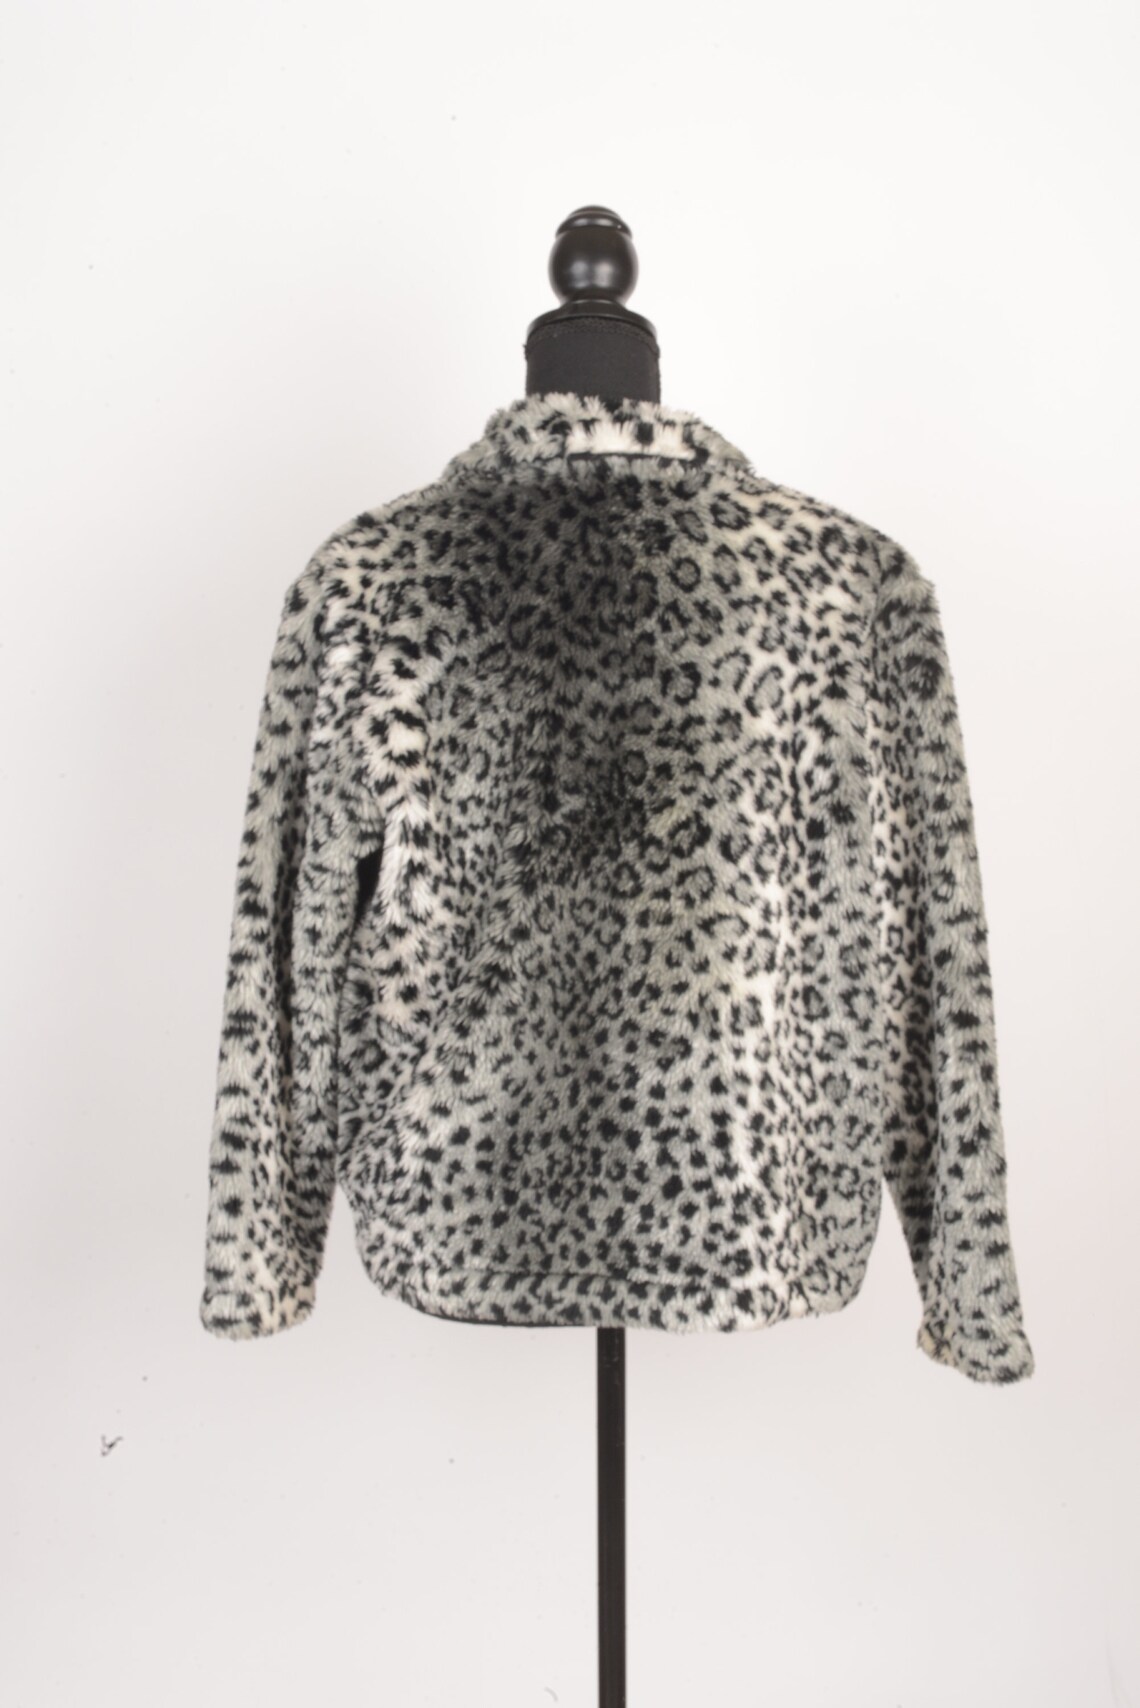 Y2K Cheetah Print White Fuzzy Zip Up Jacket Coat Bratz Egirl | Etsy